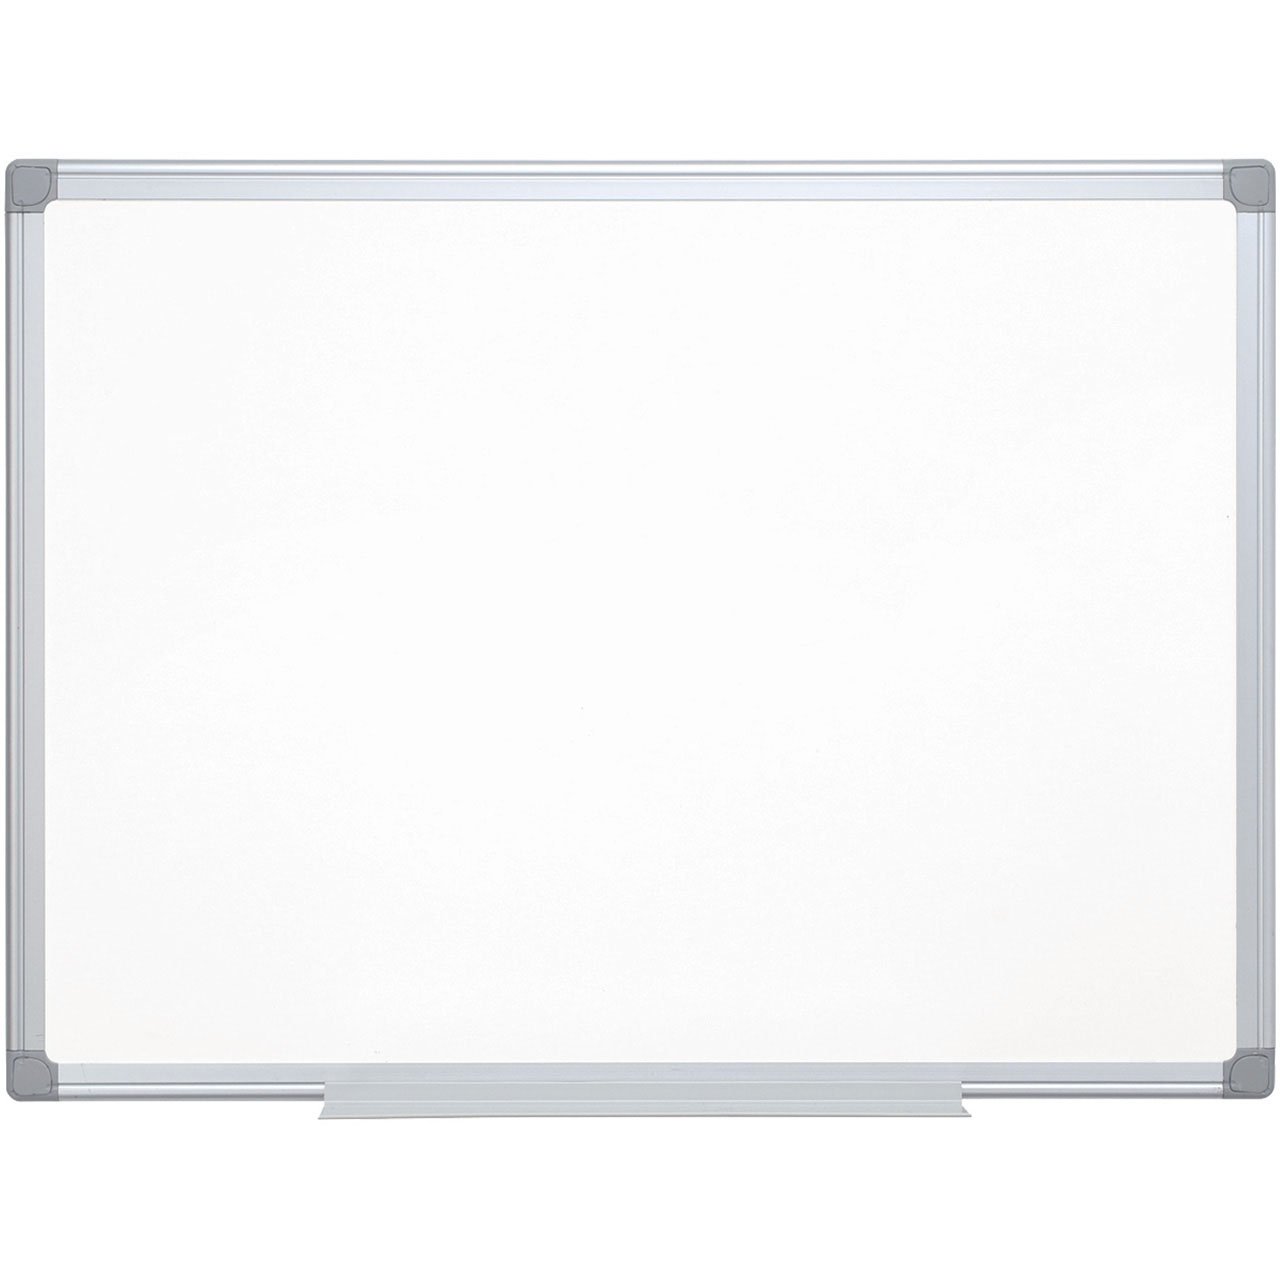 Q-connect emaljeret whiteboardtavle 900 mm x 1200 mm, Stål/Aluminium